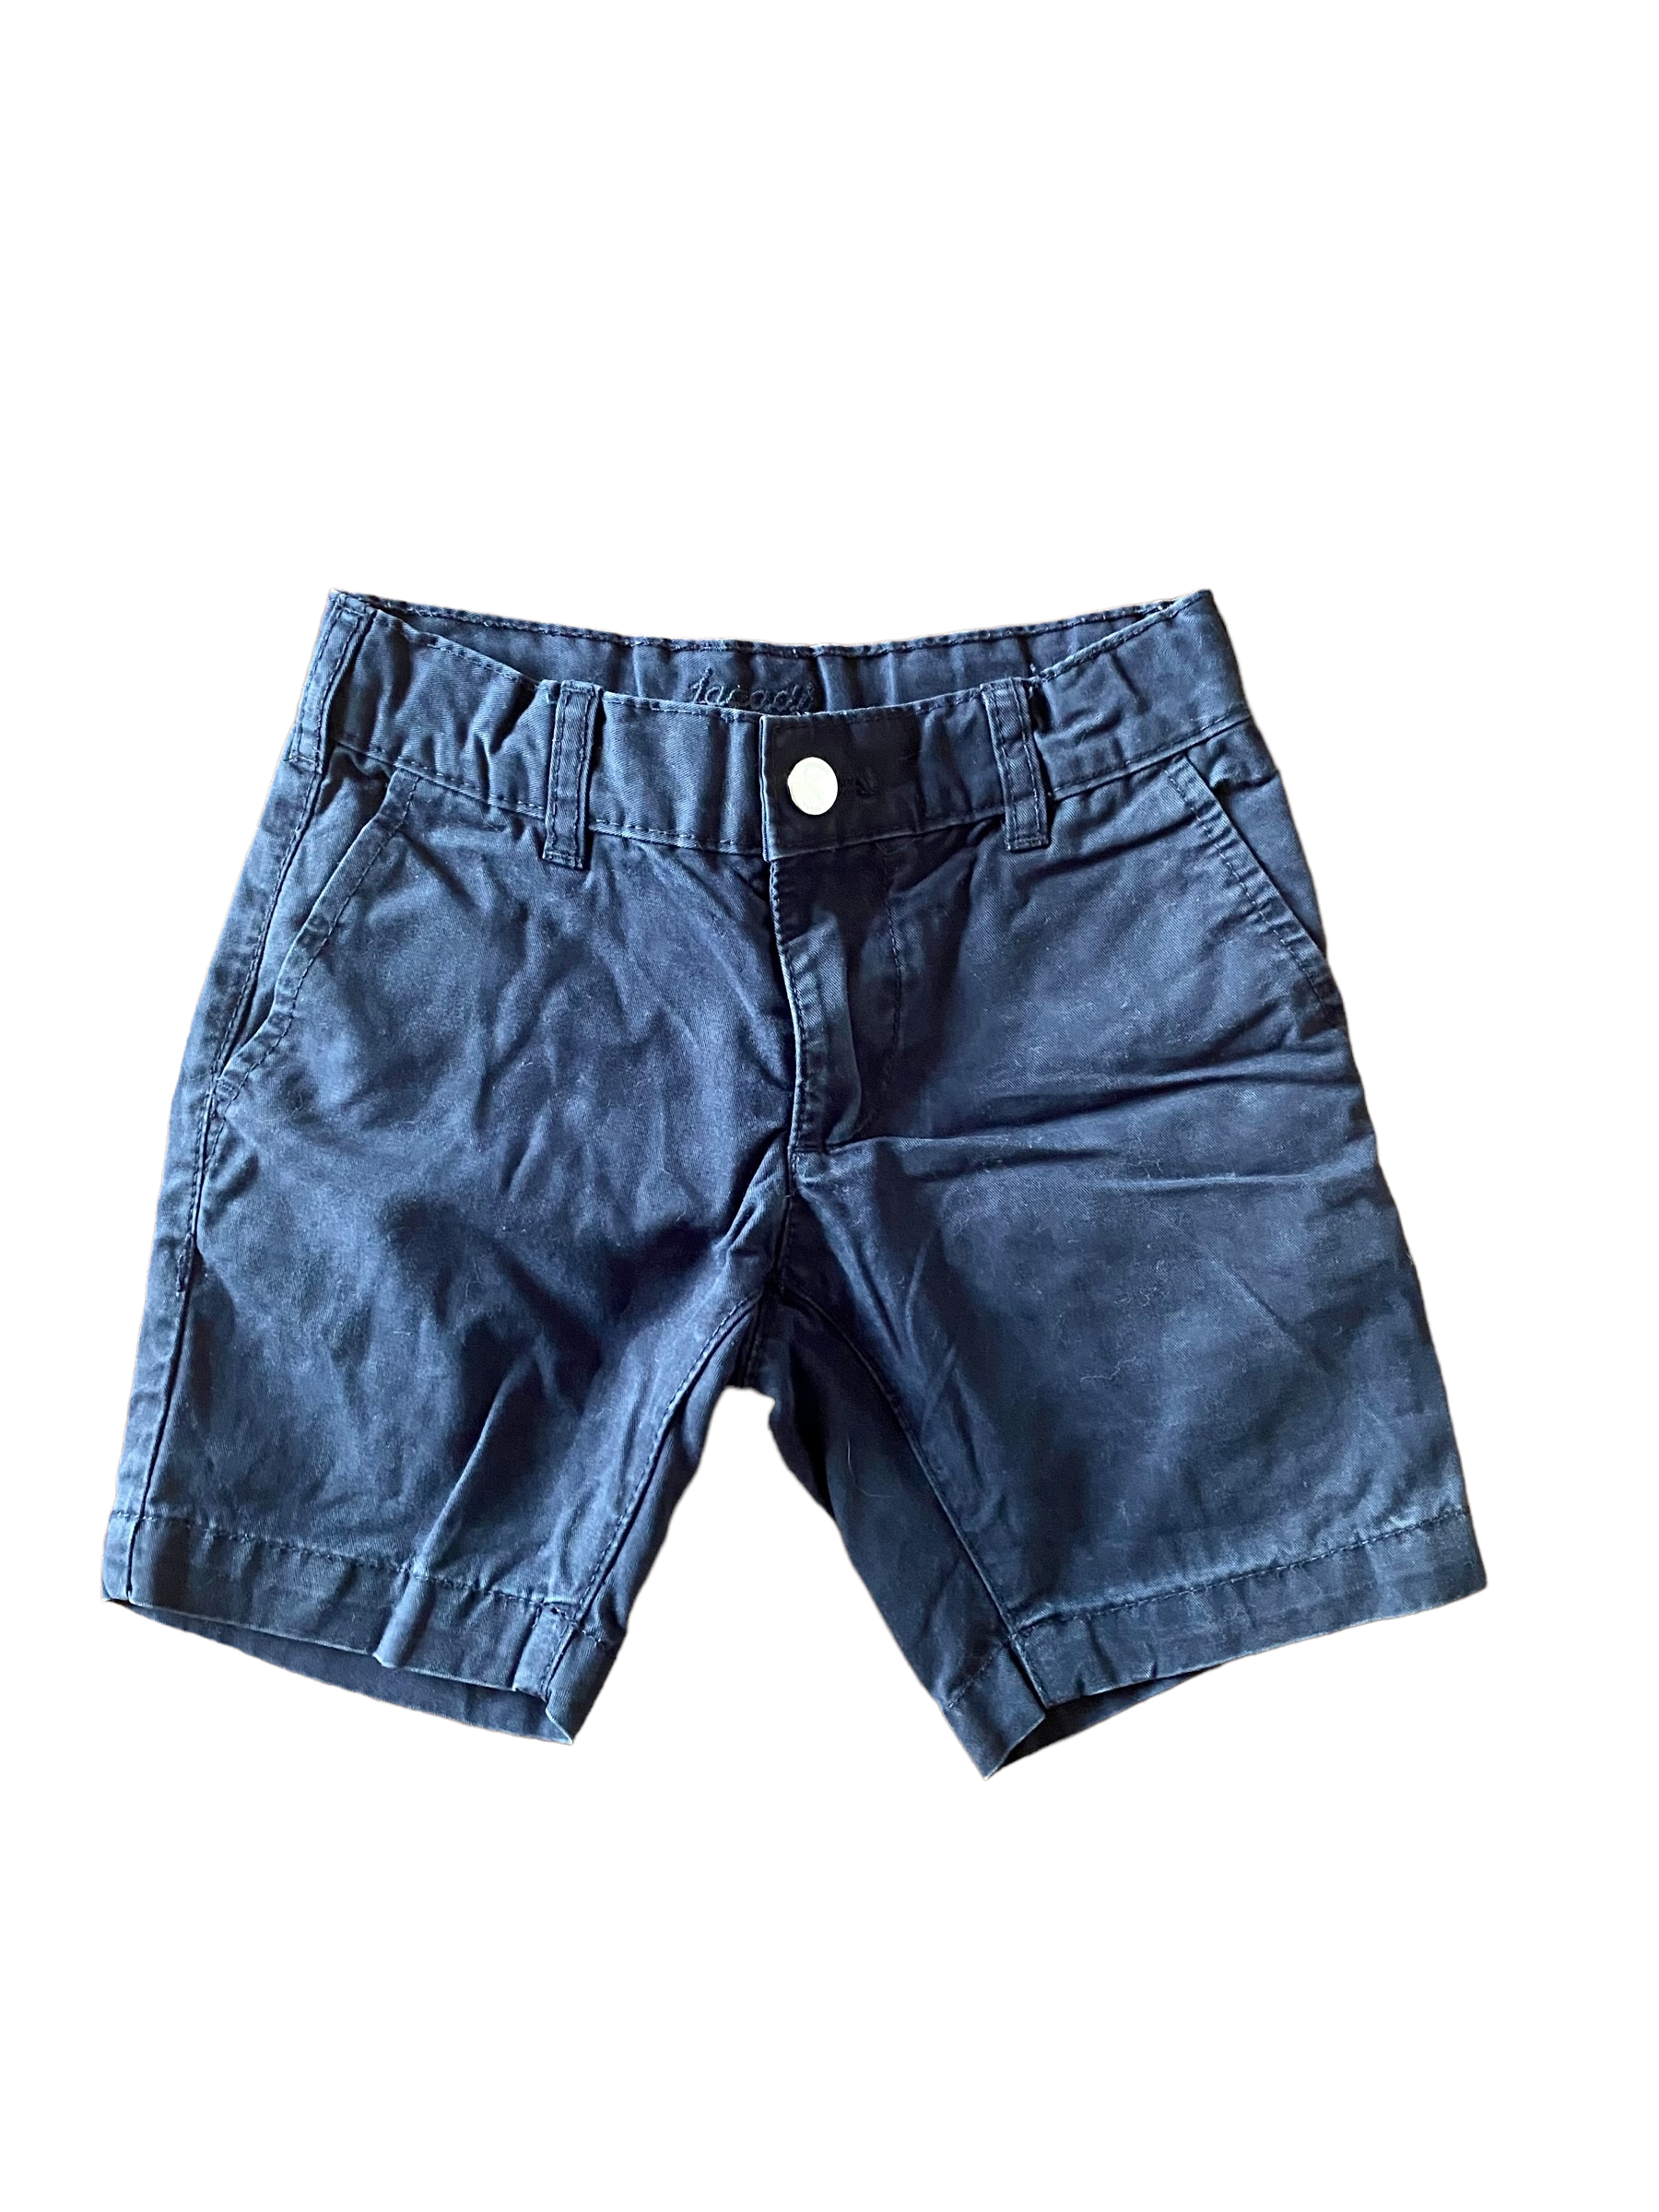 Jacadi navy blue cotton shorts